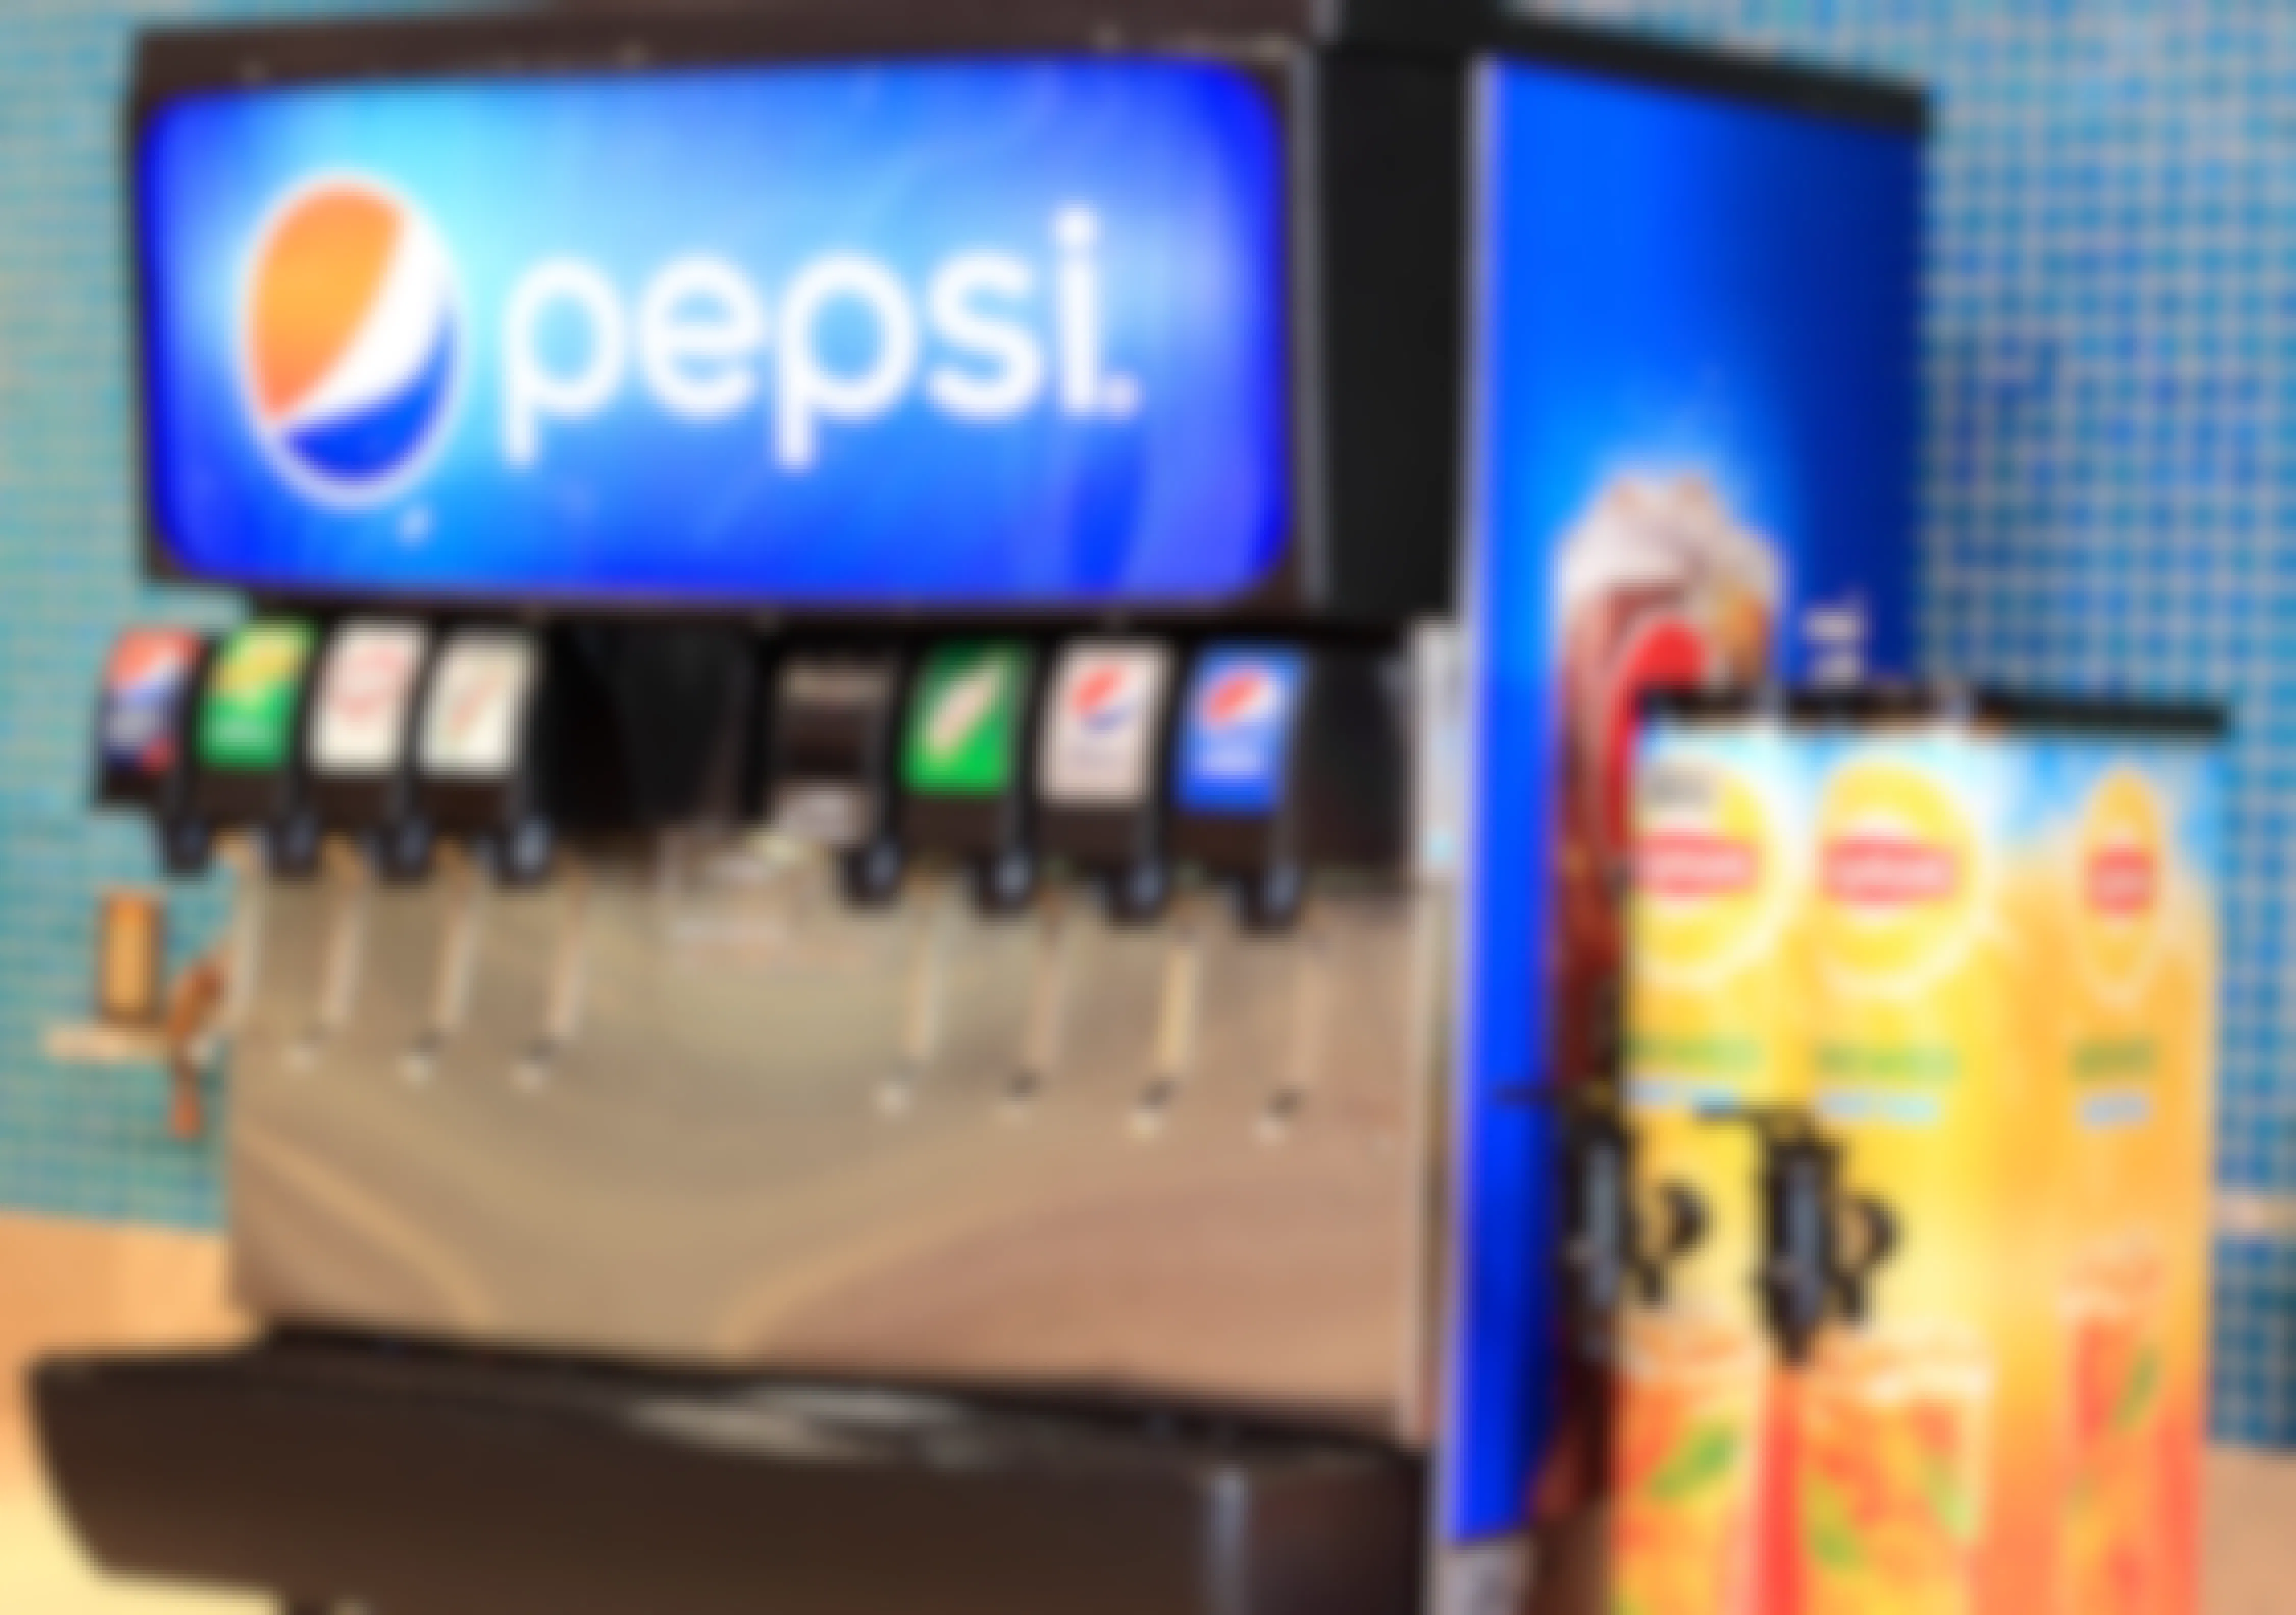 Pepsi soda fountain drink dispenser